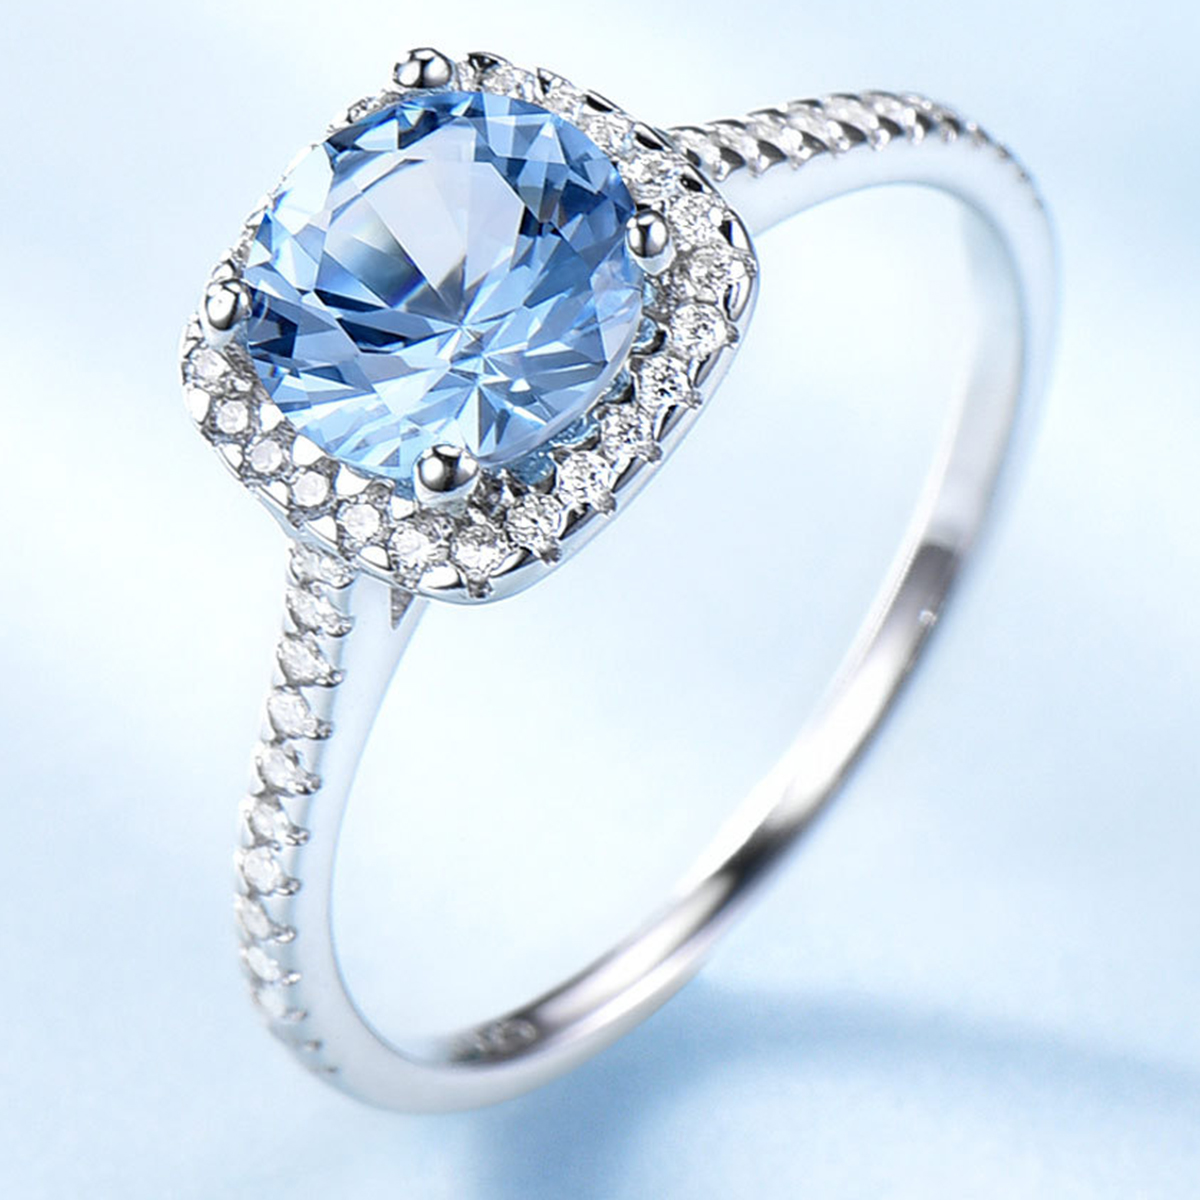 Cz Nano Fashion Sky Blue Topaz Sterling Silver Ring